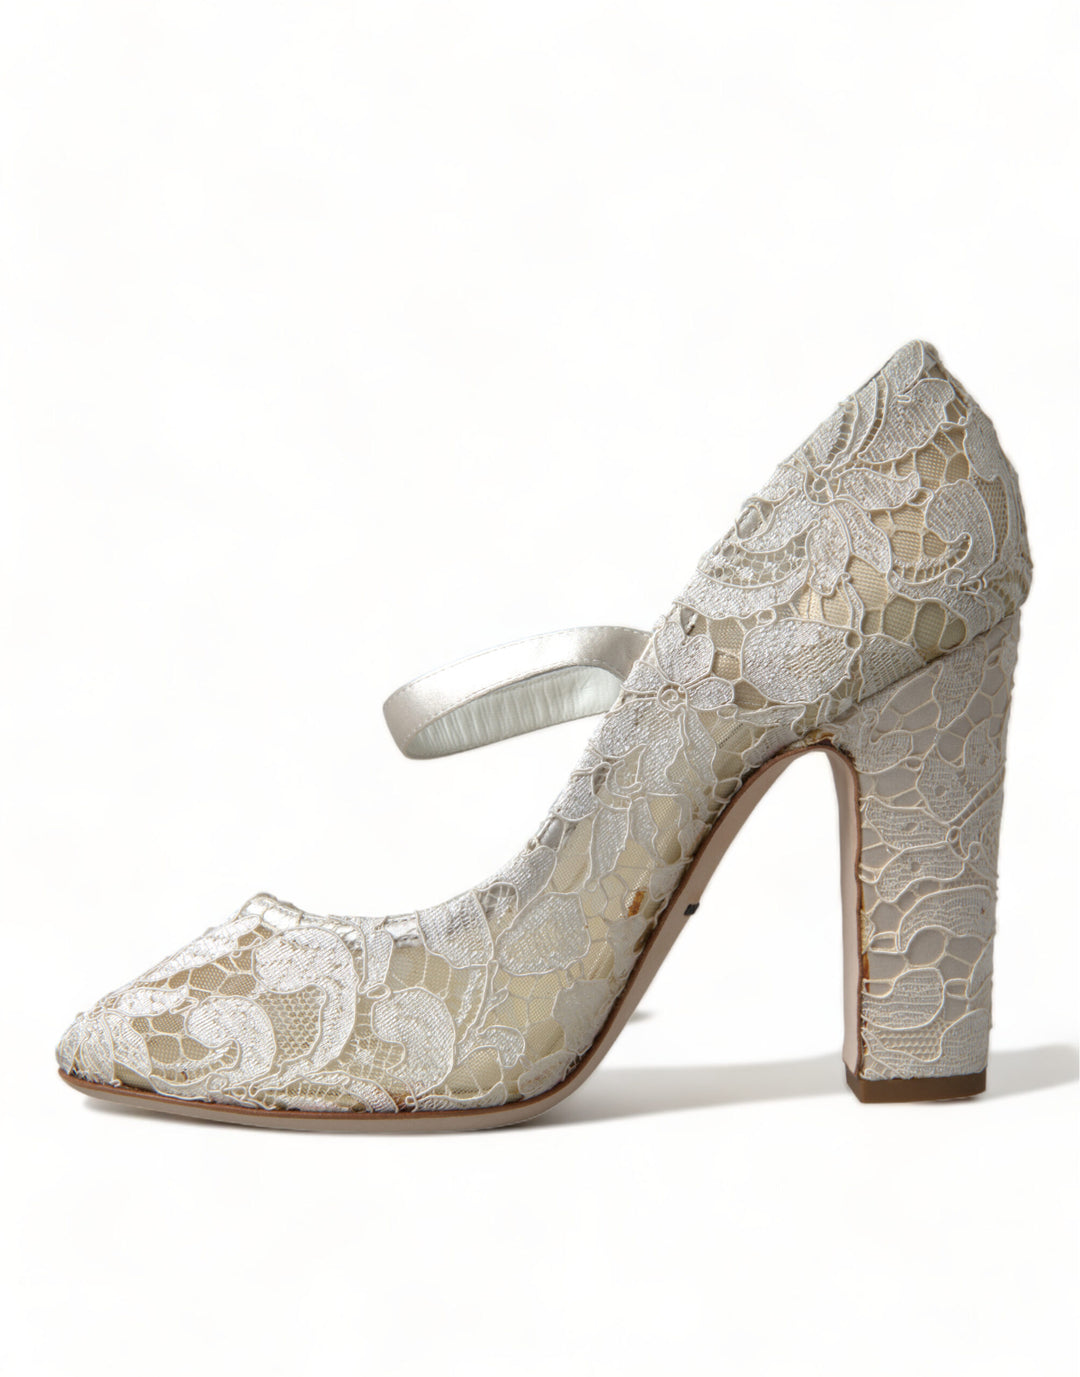 Dolce & Gabbana Chic Lace Block Heels Sandals in Cream White